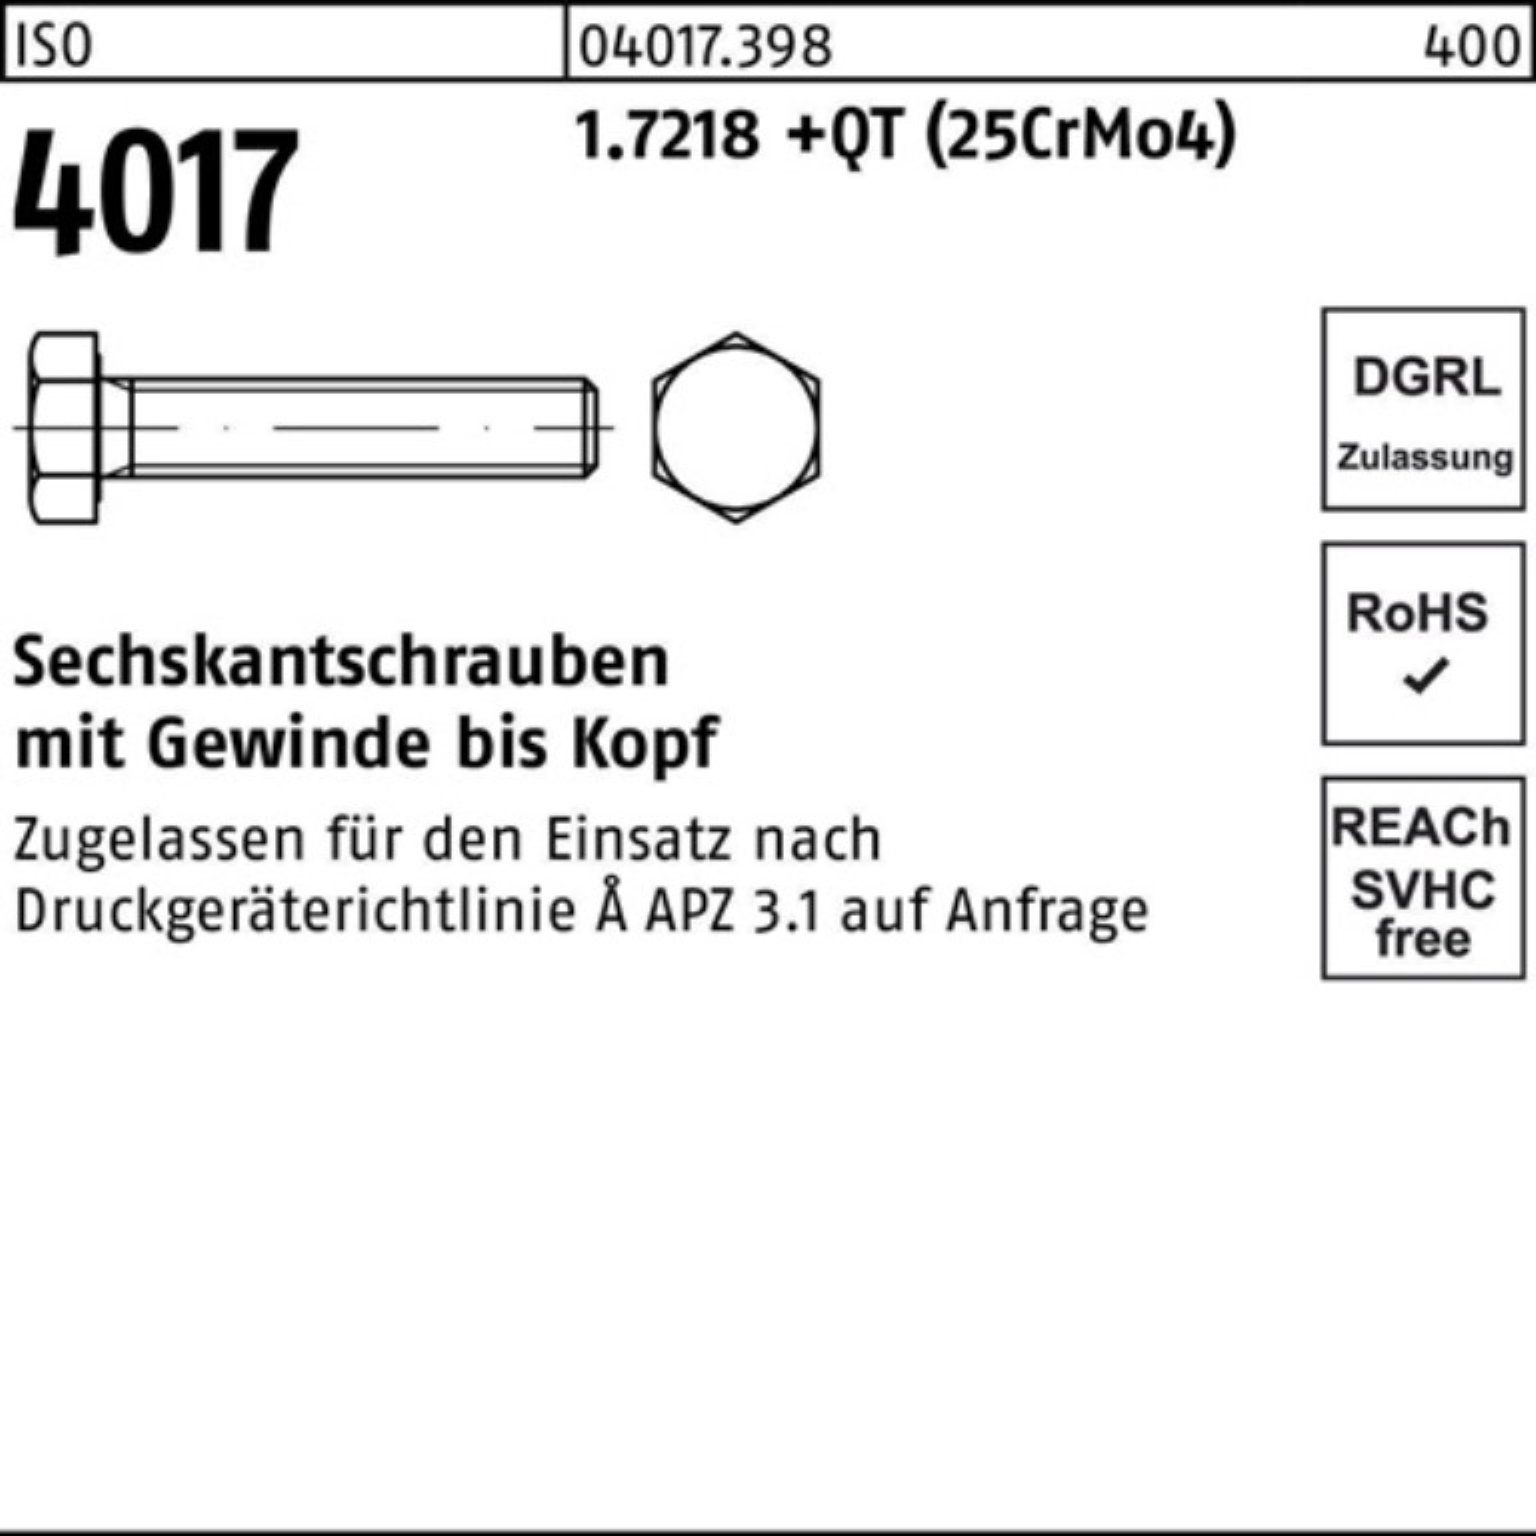 Bufab Sechskantschraube 100er Pack Sechskantschraube +QT VG 130 ISO (25CrMo4) 4017 M36x 1.7218